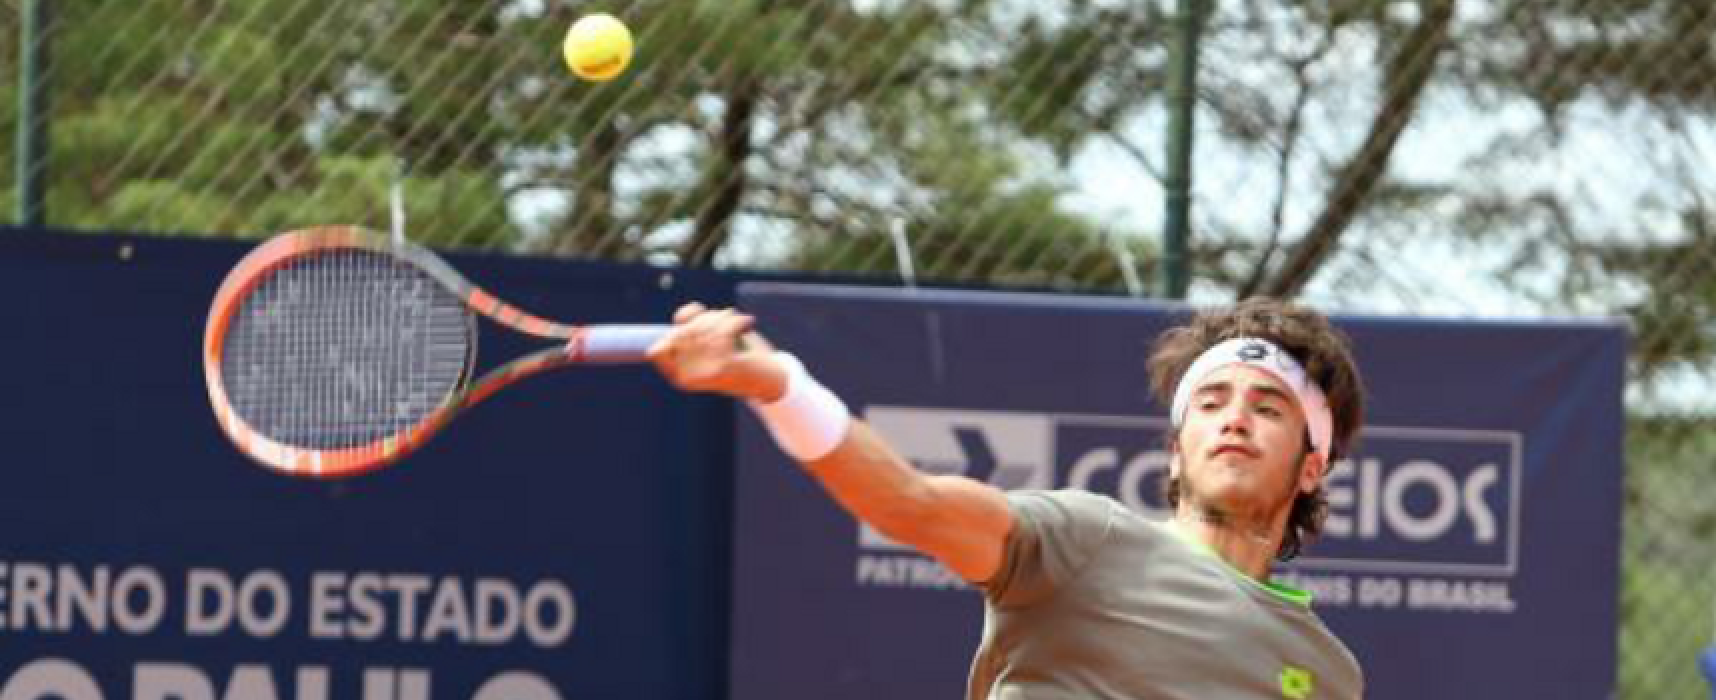 Tennis, Pellegrino eliminato al primo turno degli Australian Open